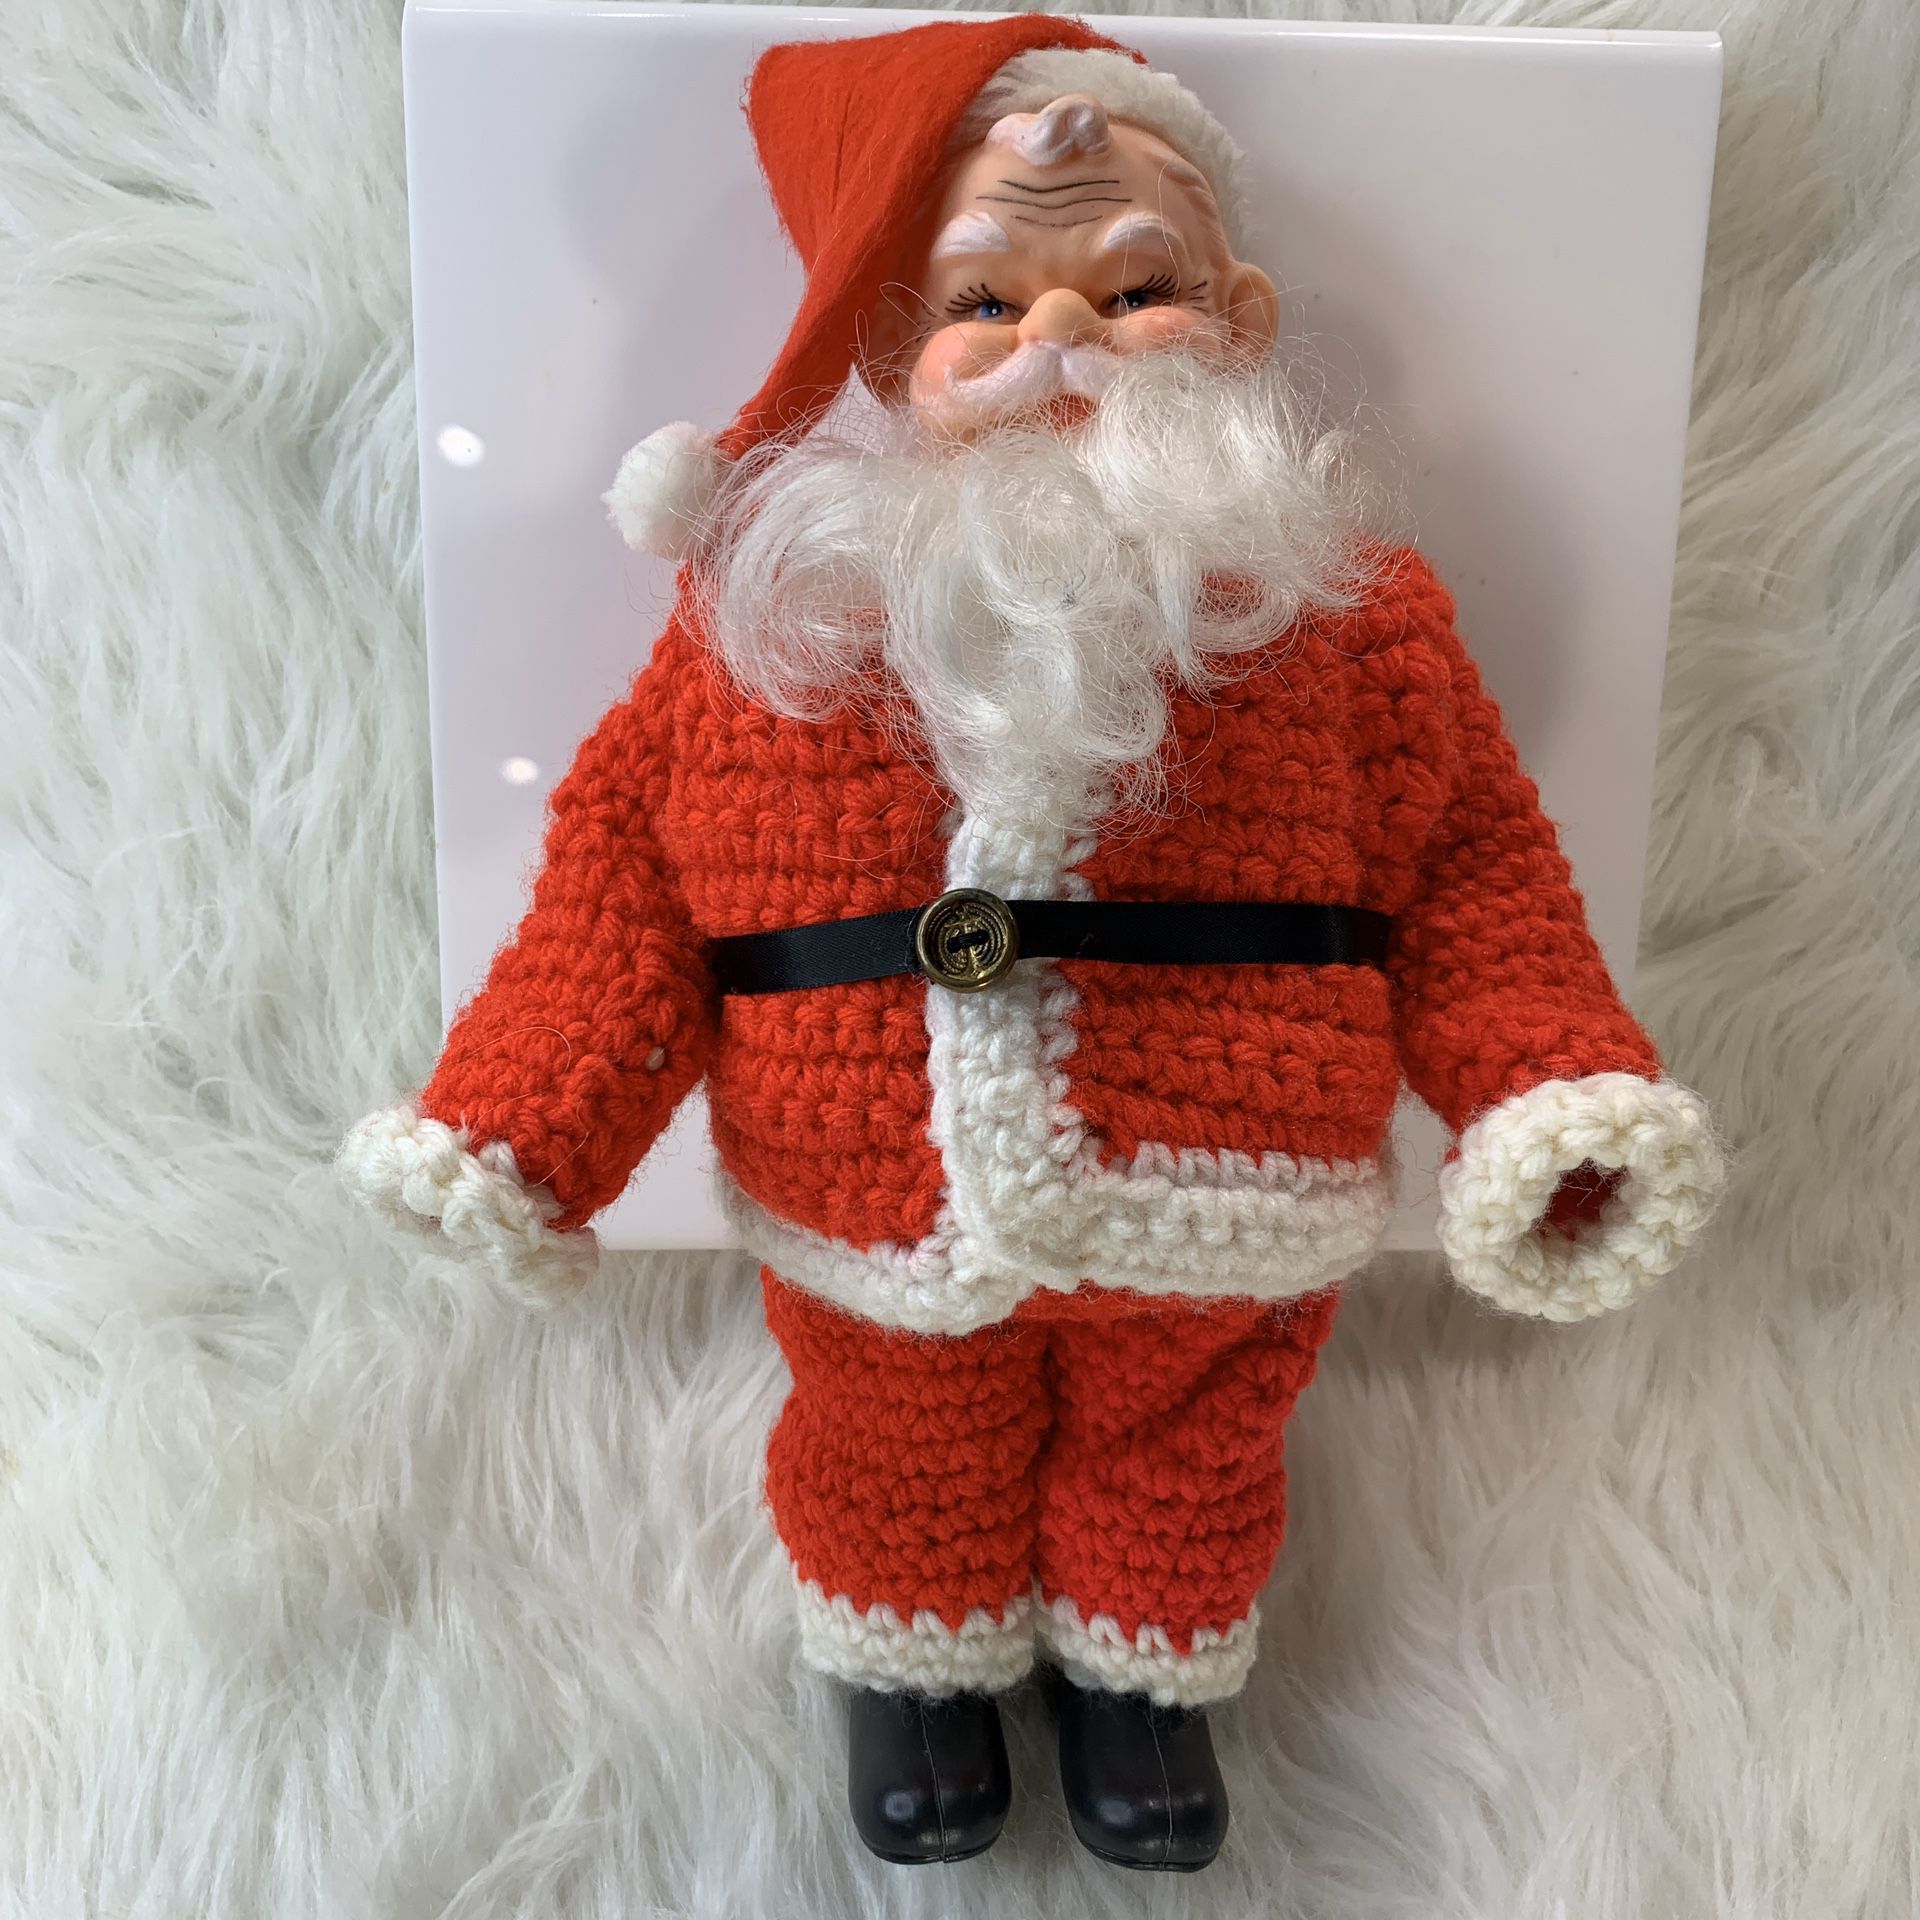 Plastic Santa Clause w/ Handmade Crochet Suit & Felt Hat